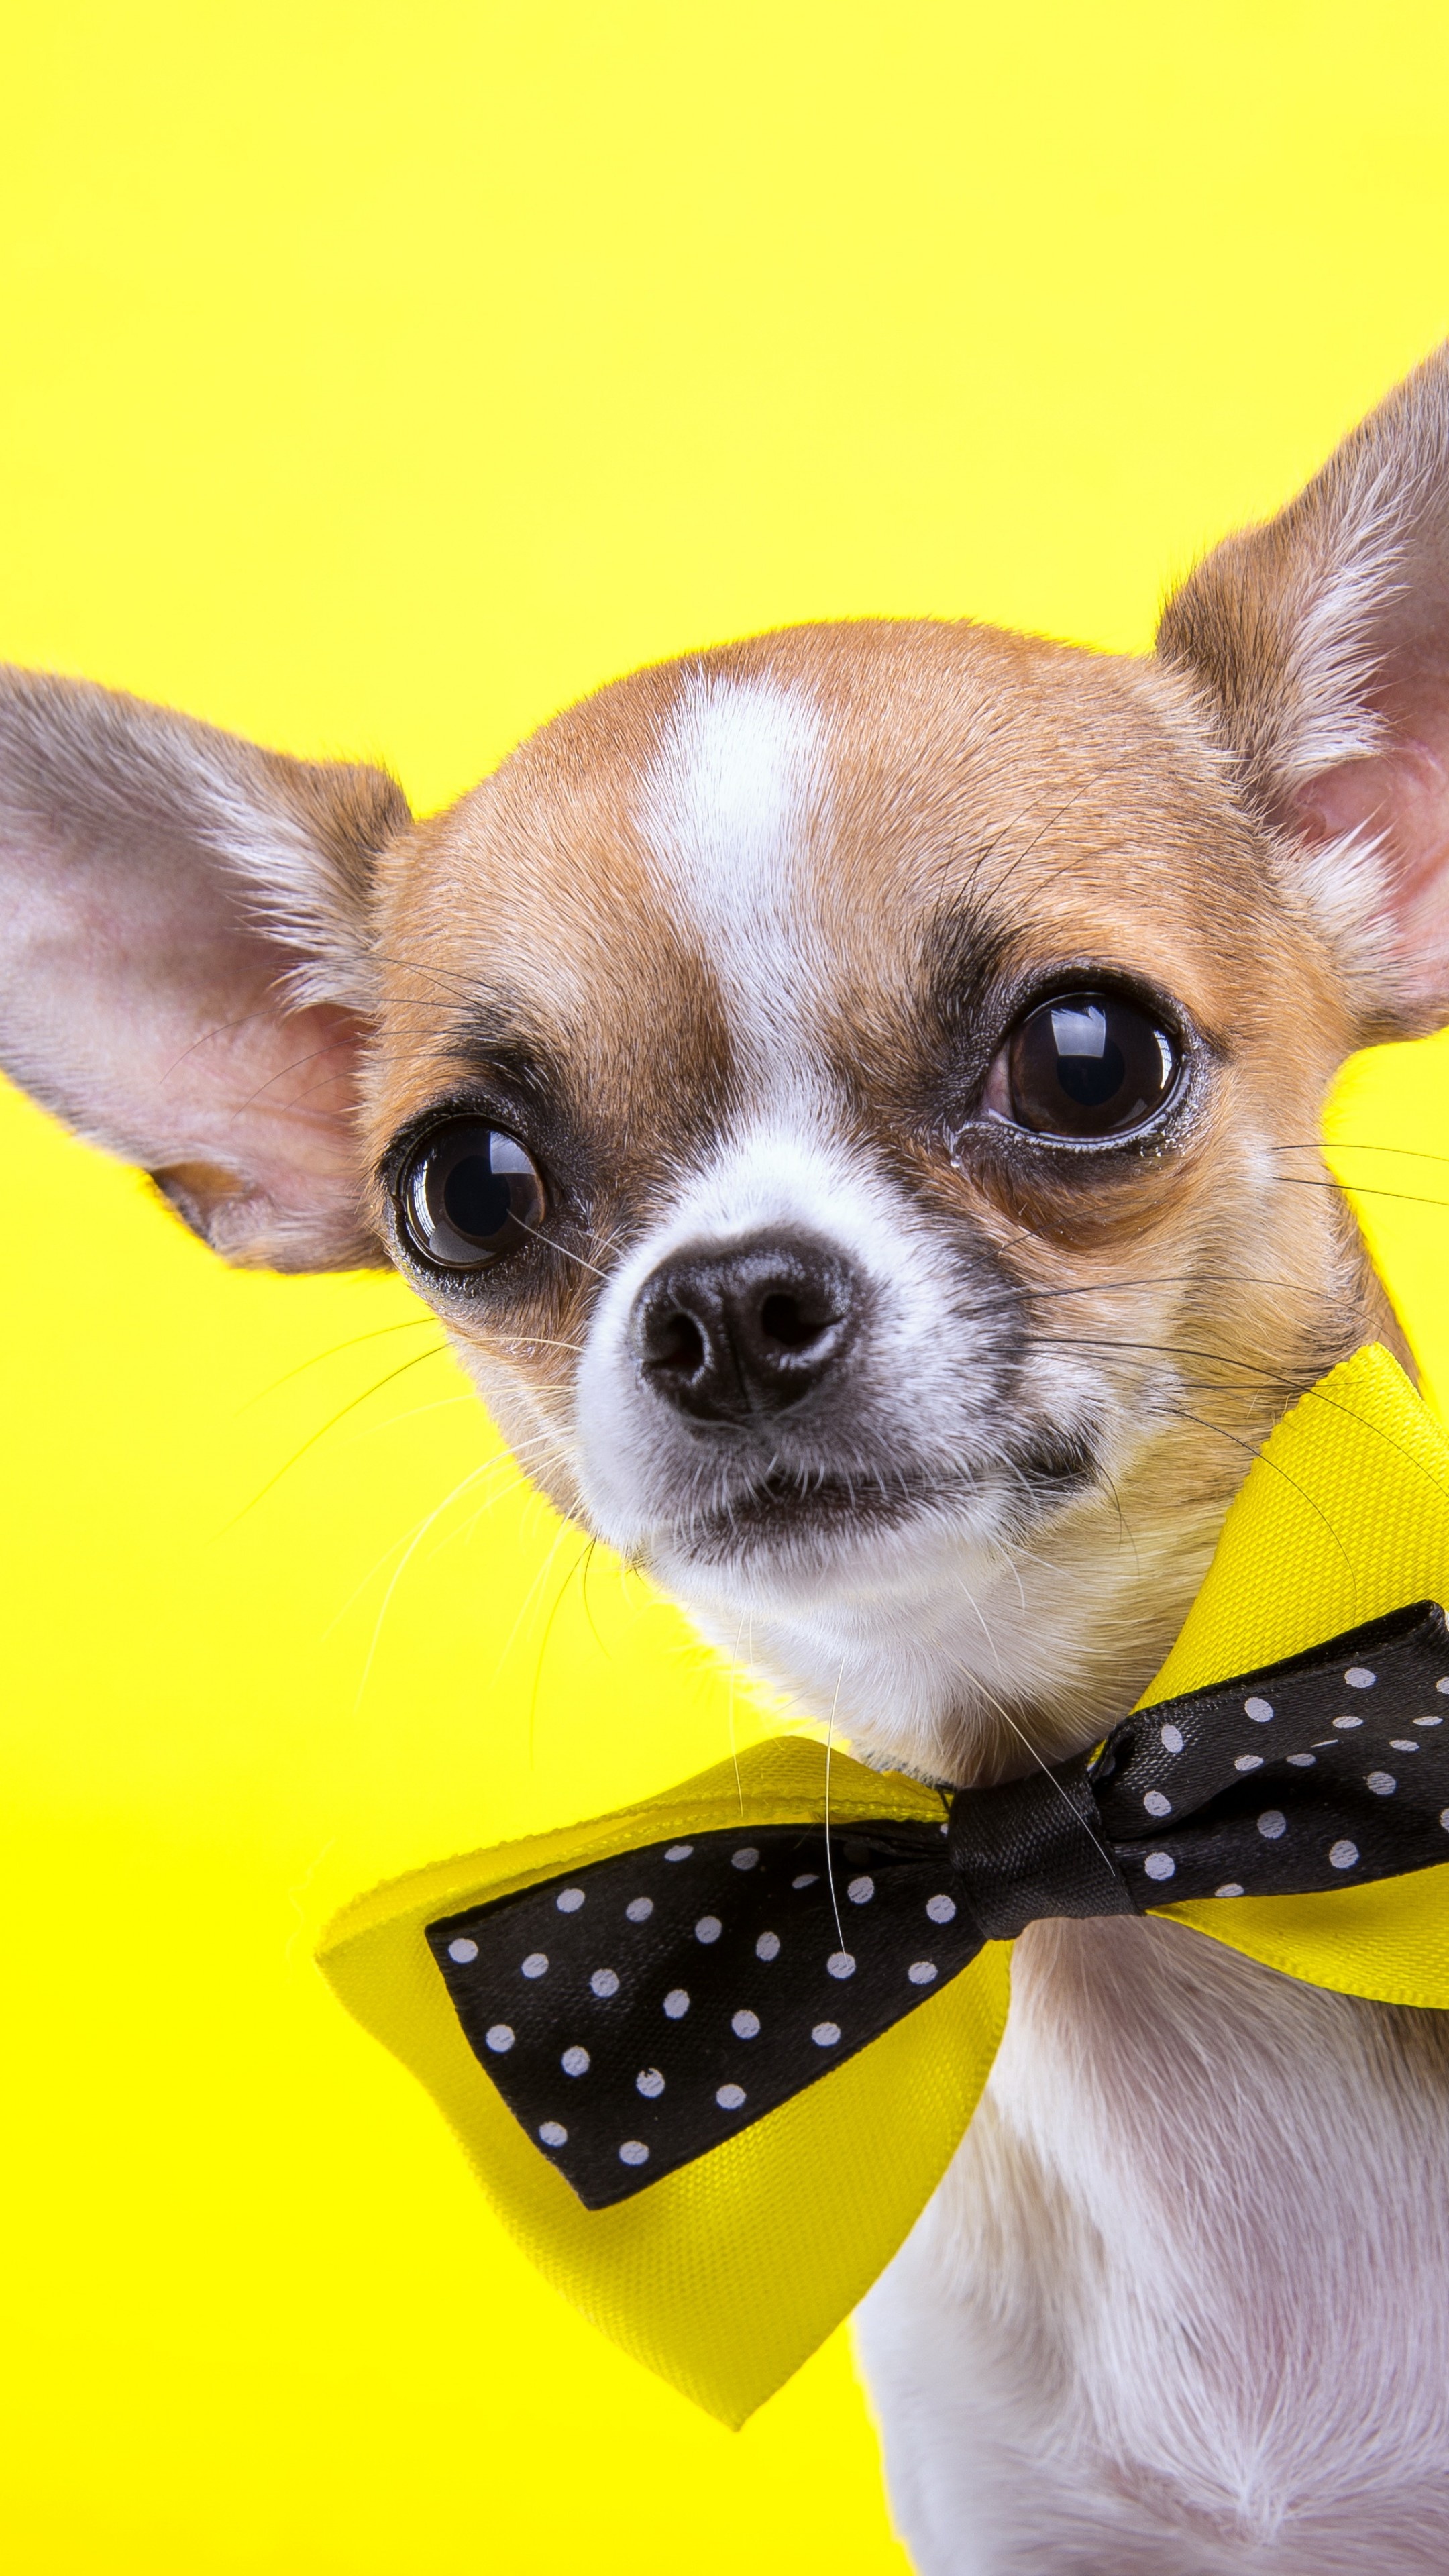 Chihuahua dog in yellow, Cute and playful, Stunning wallpaper, Beautiful imagery, 2160x3840 4K Handy